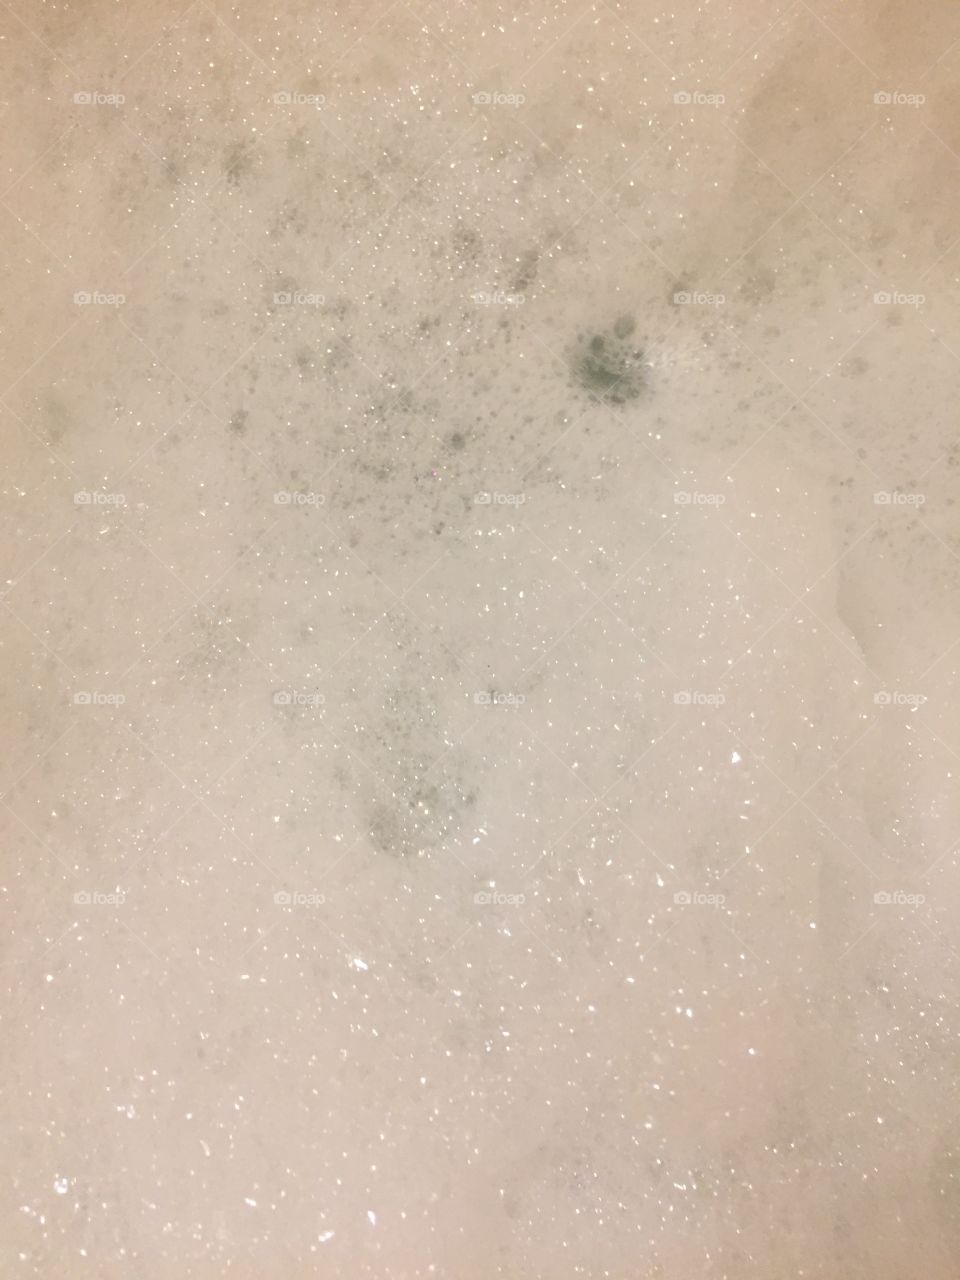 Bubbles in the tub